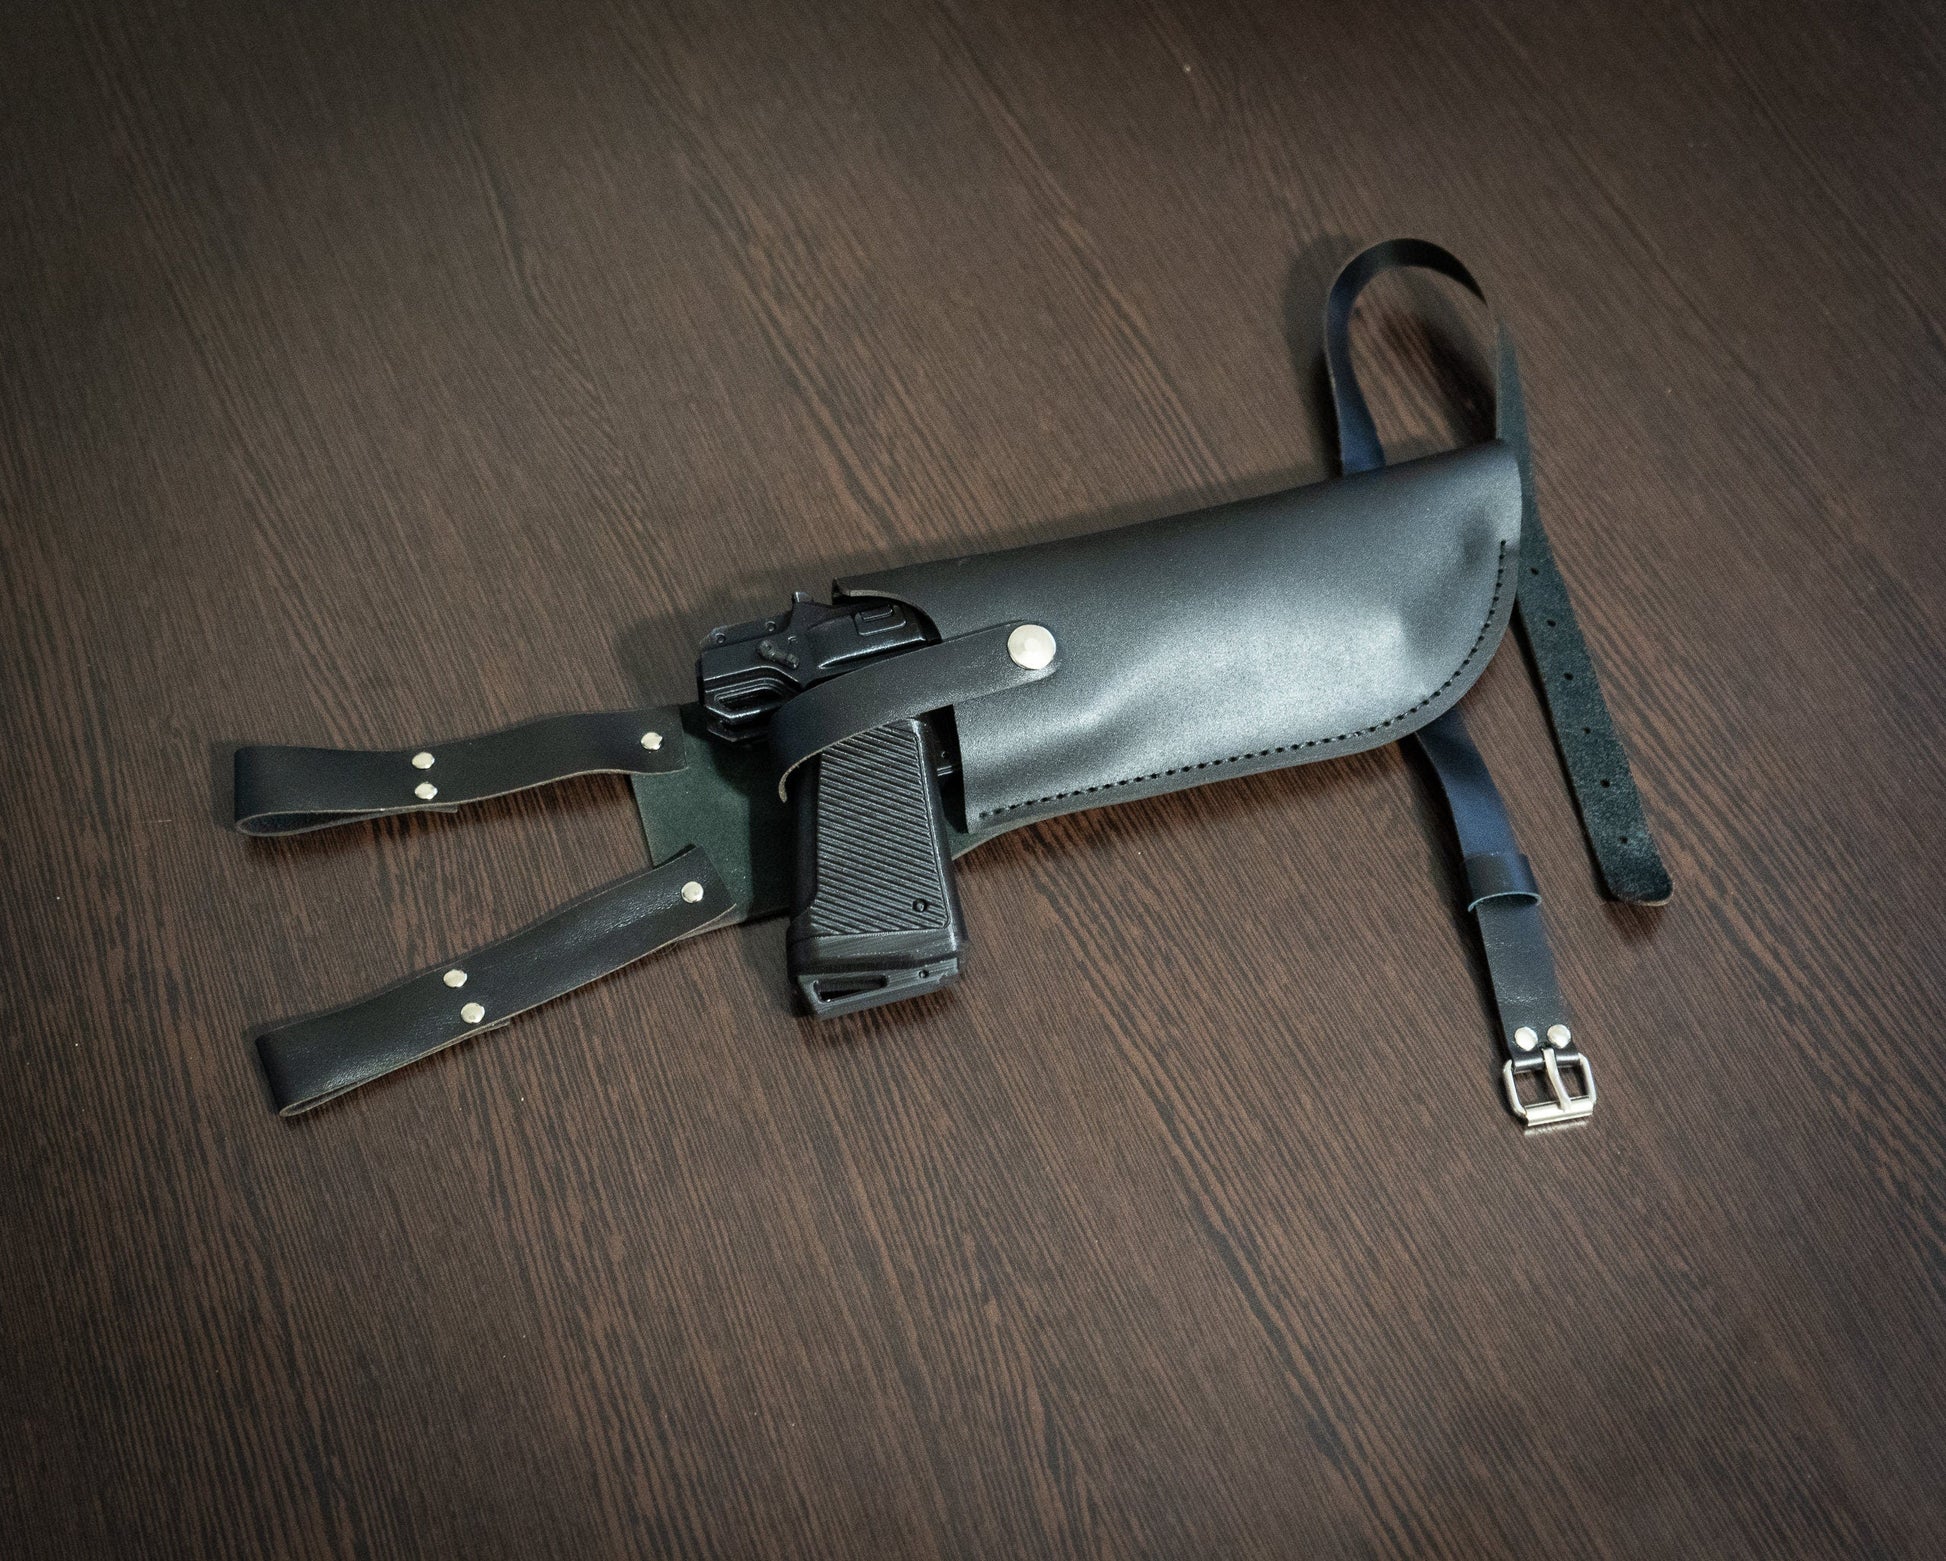 Westar 35 blaster pistol with leather holster | Star Wars Replica gun | Star Wars Props | Star Wars Cosplay - 3DPrintProps